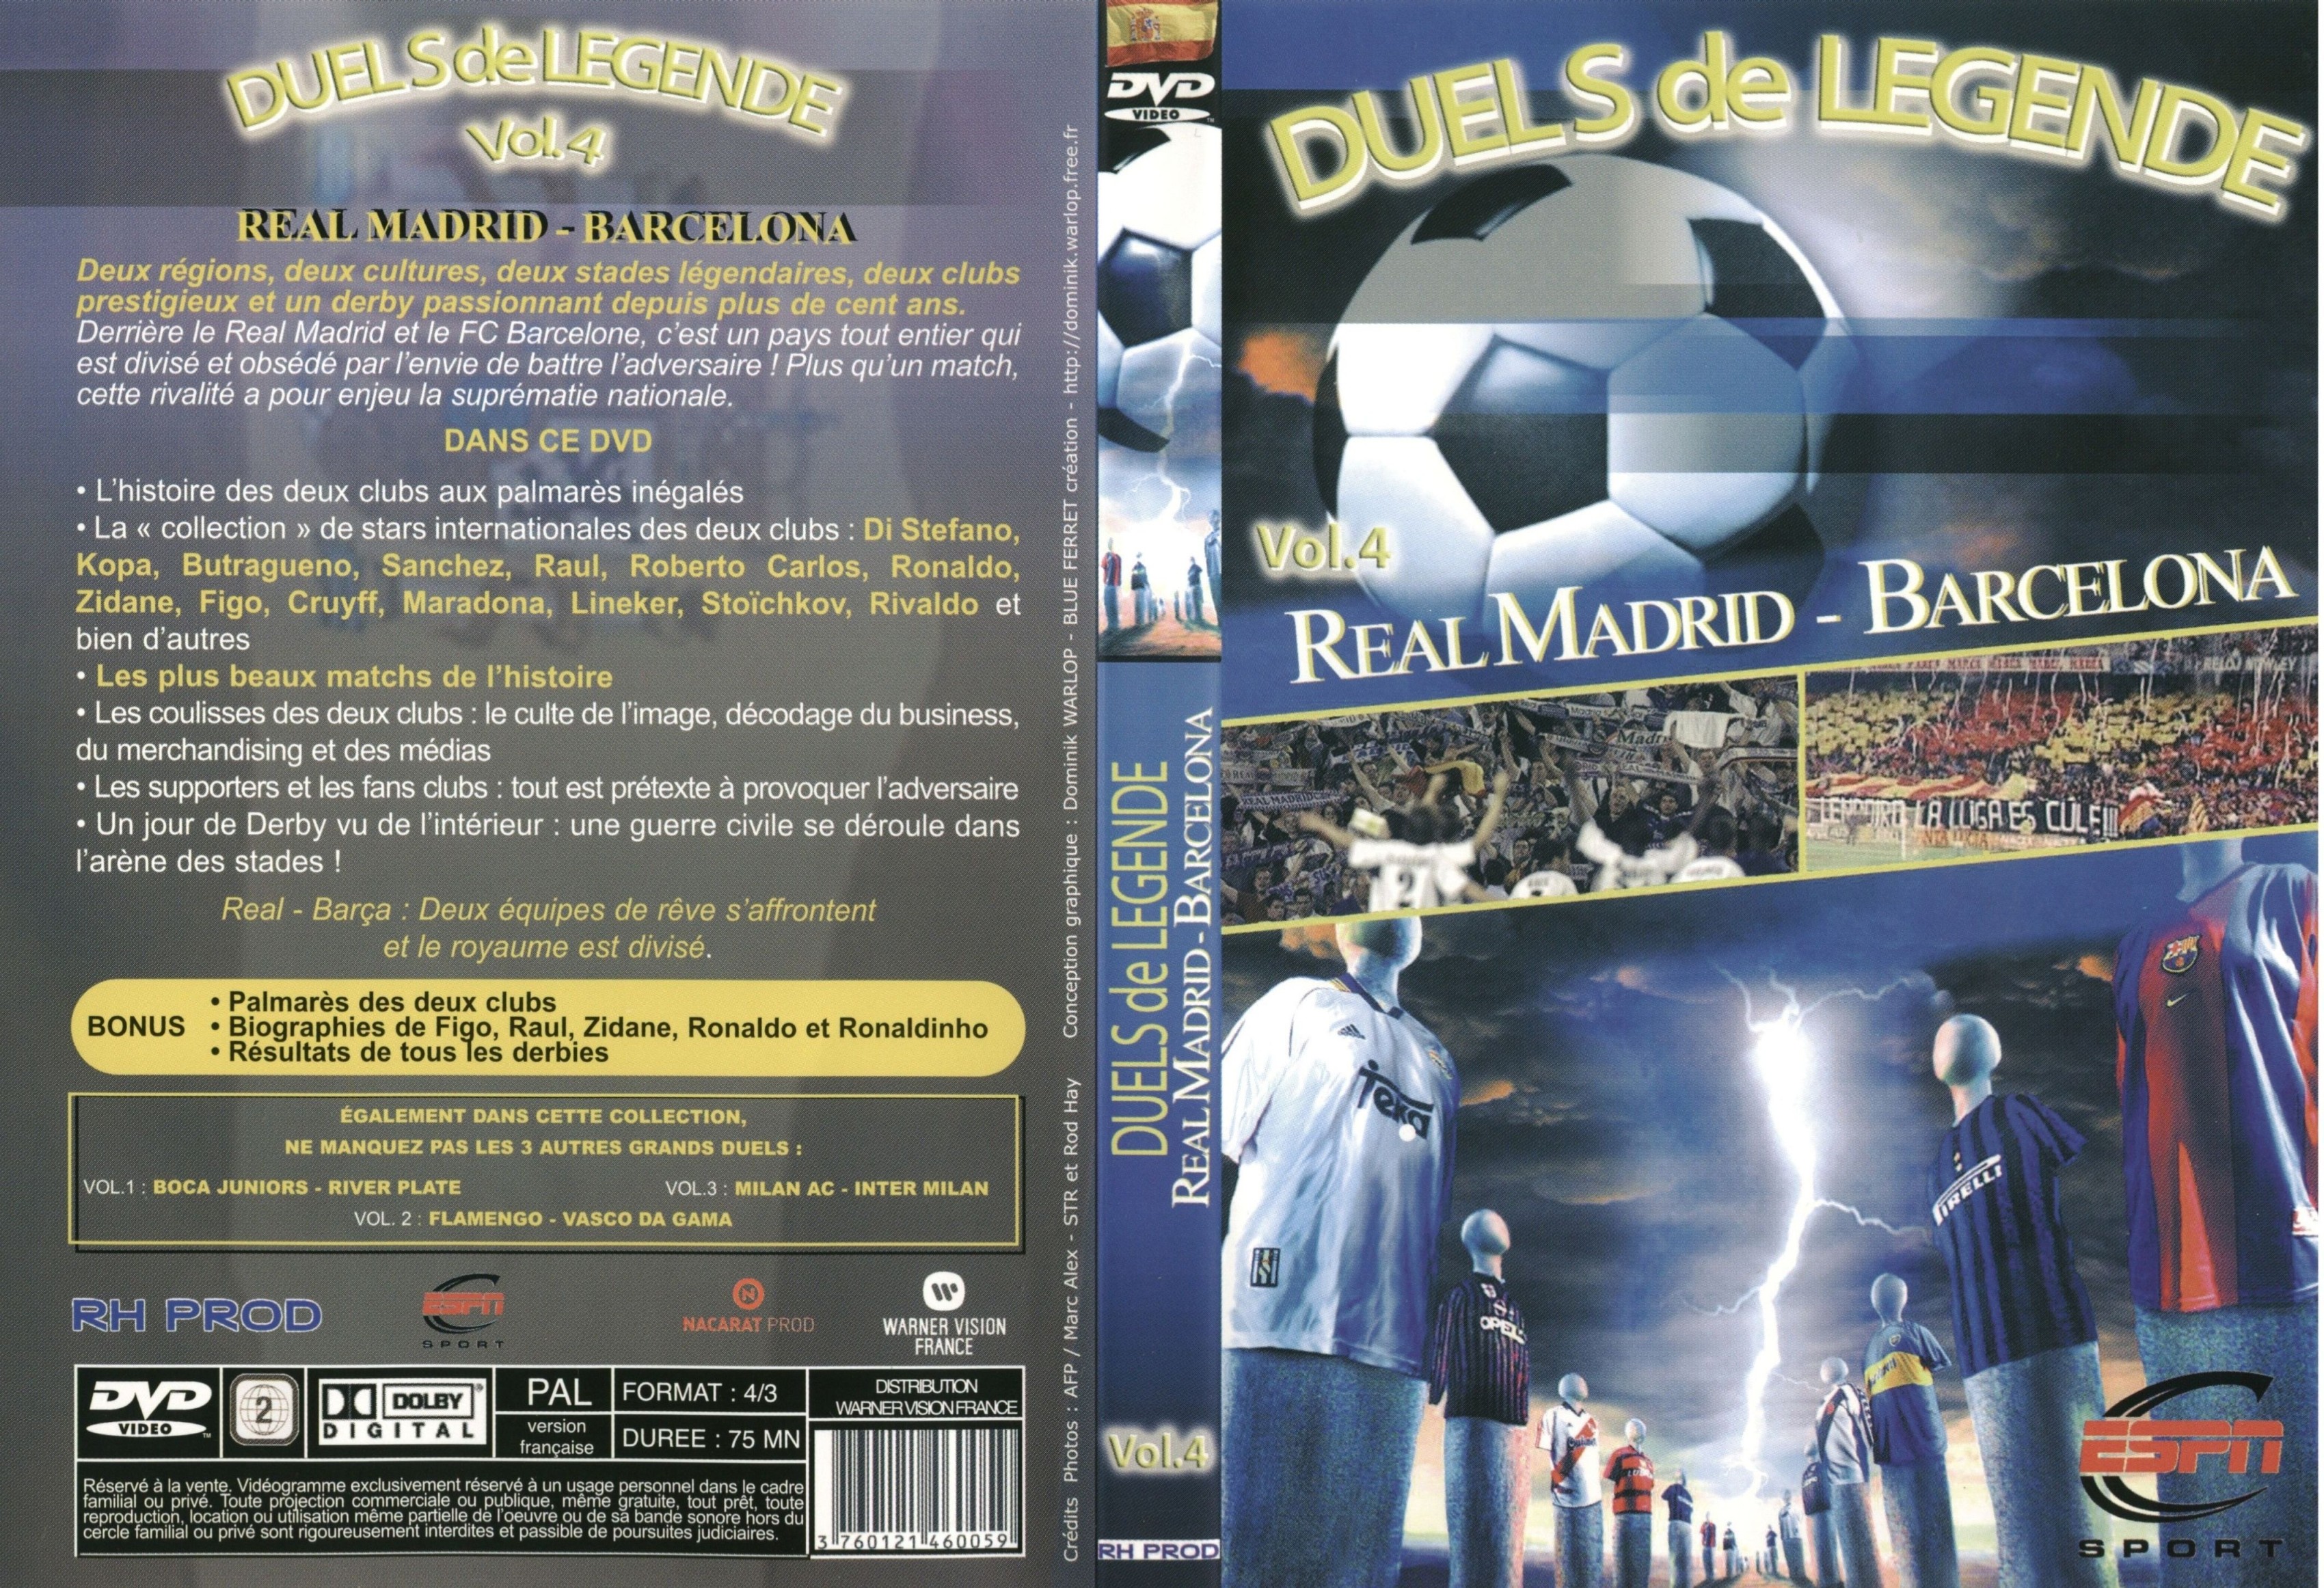 Jaquette DVD Duels de lgende vol 4 real madrid-barcelona